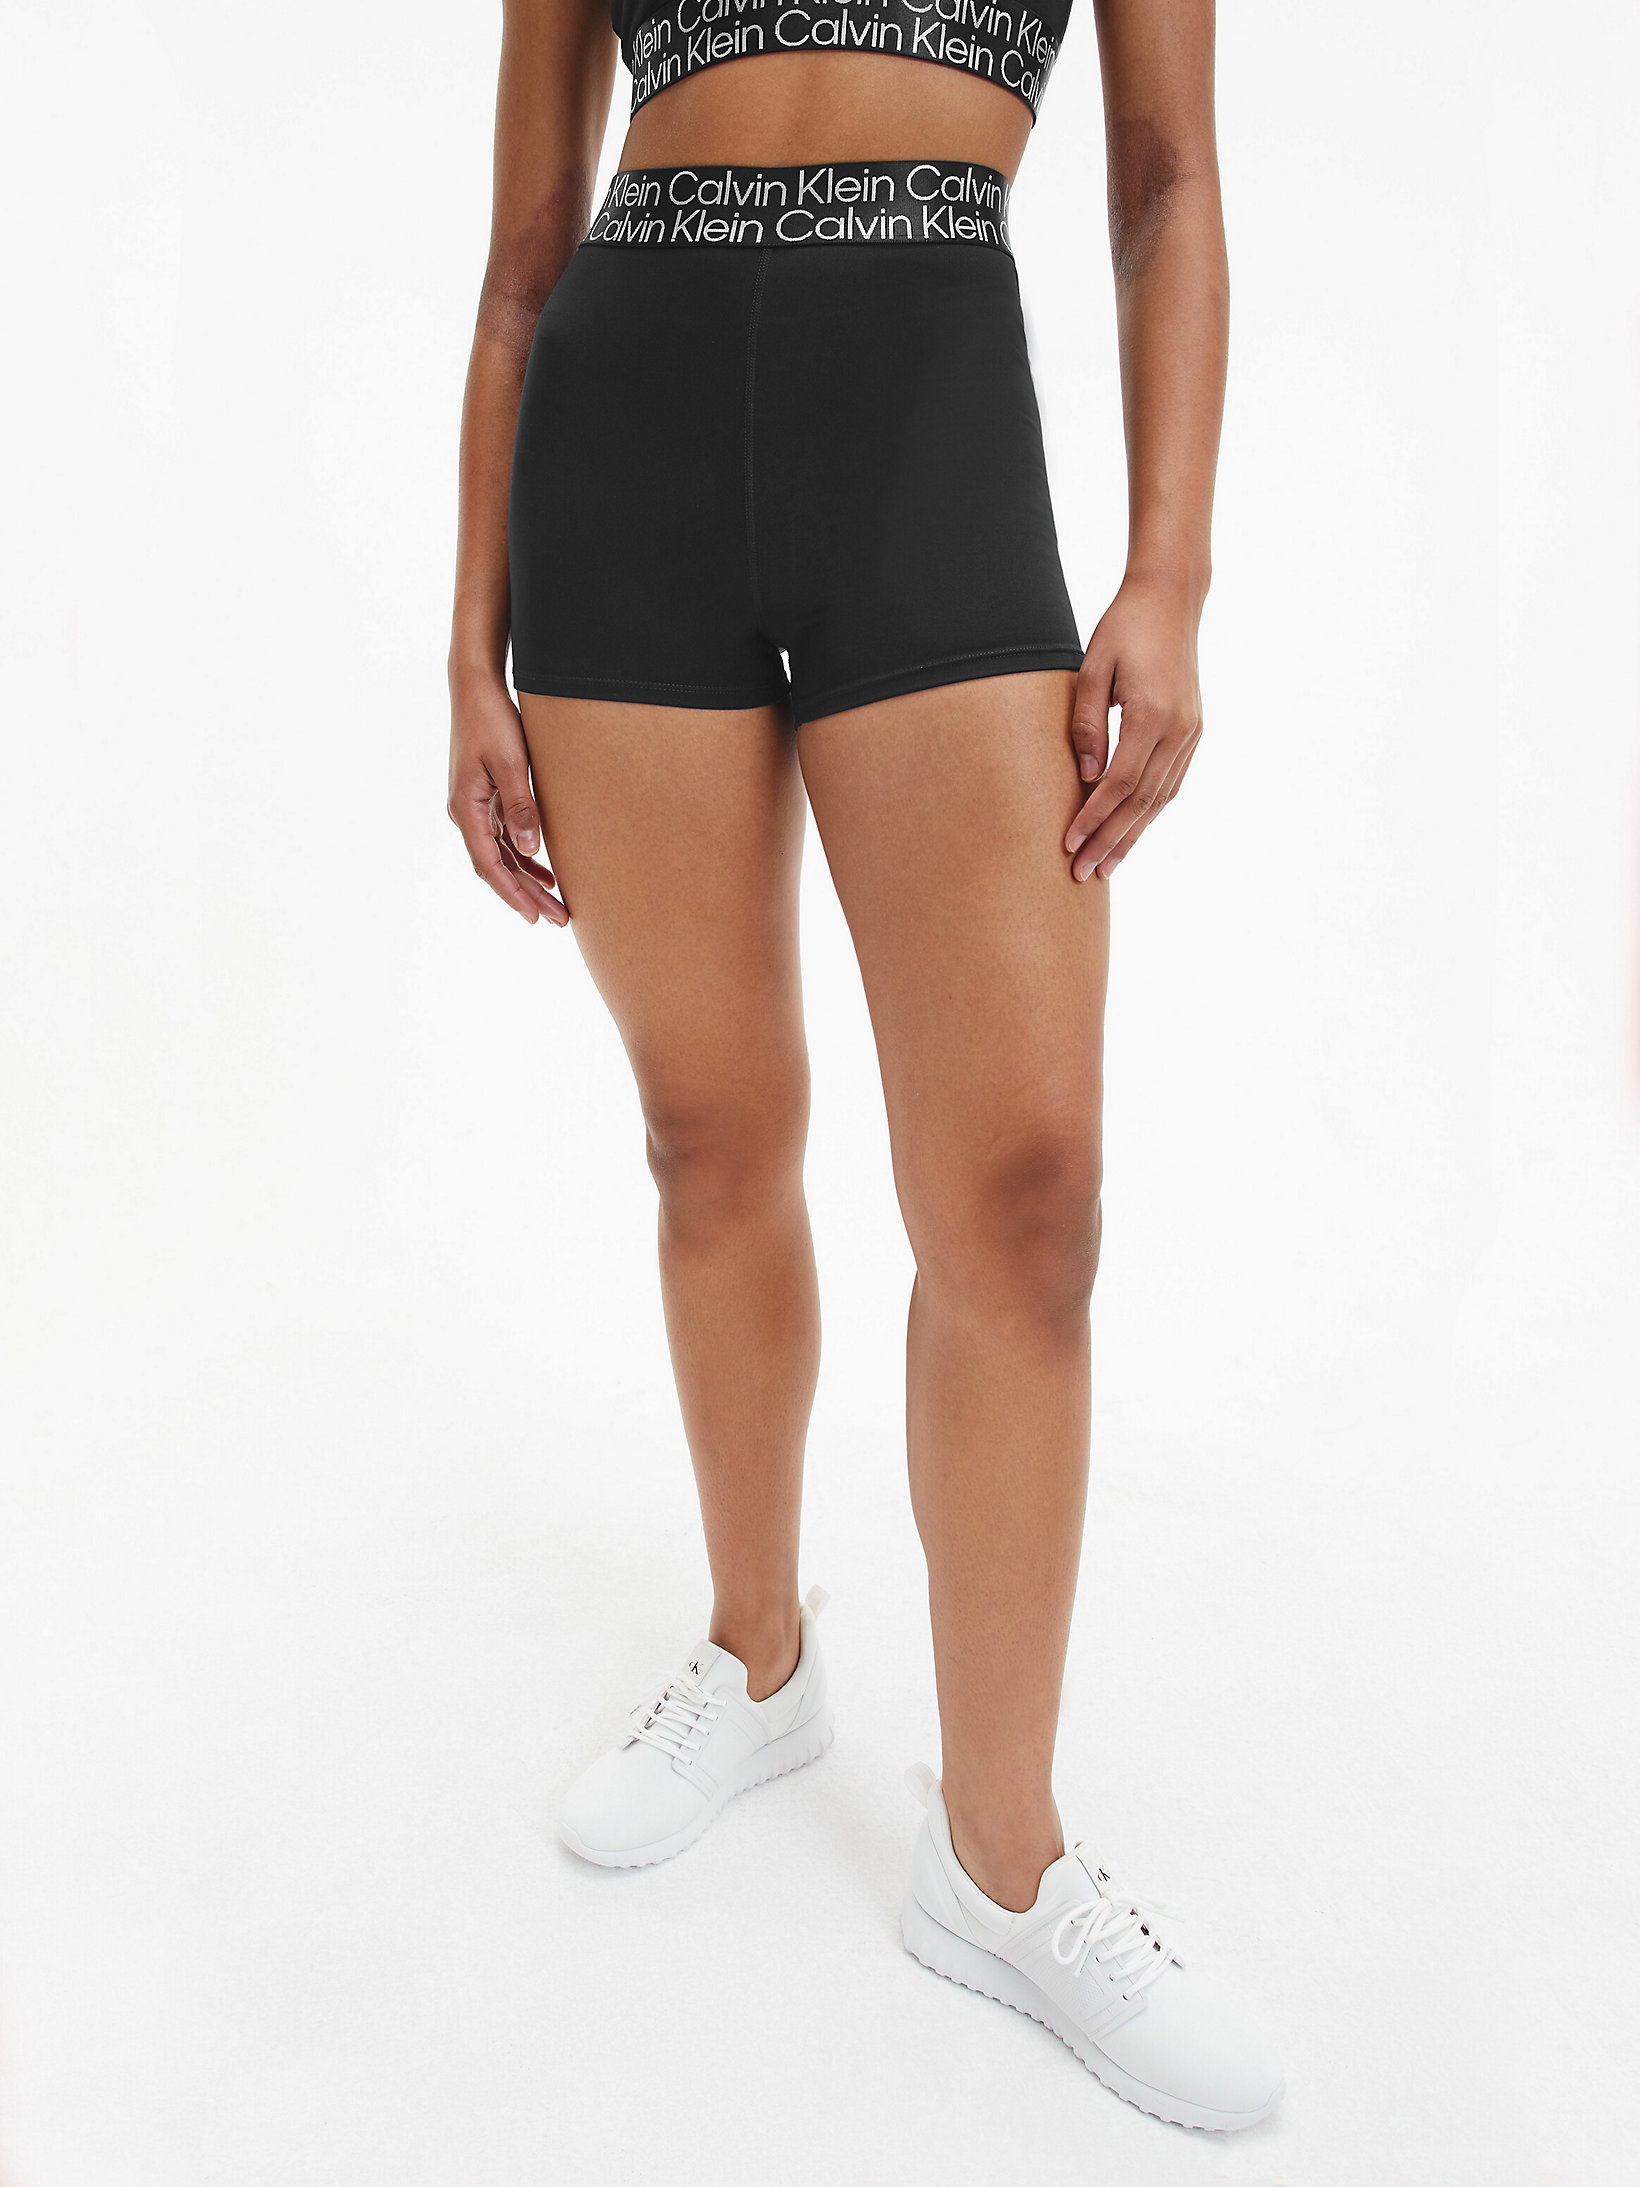 Black Beauty Tight Gym Shorts undefined women Calvin Klein